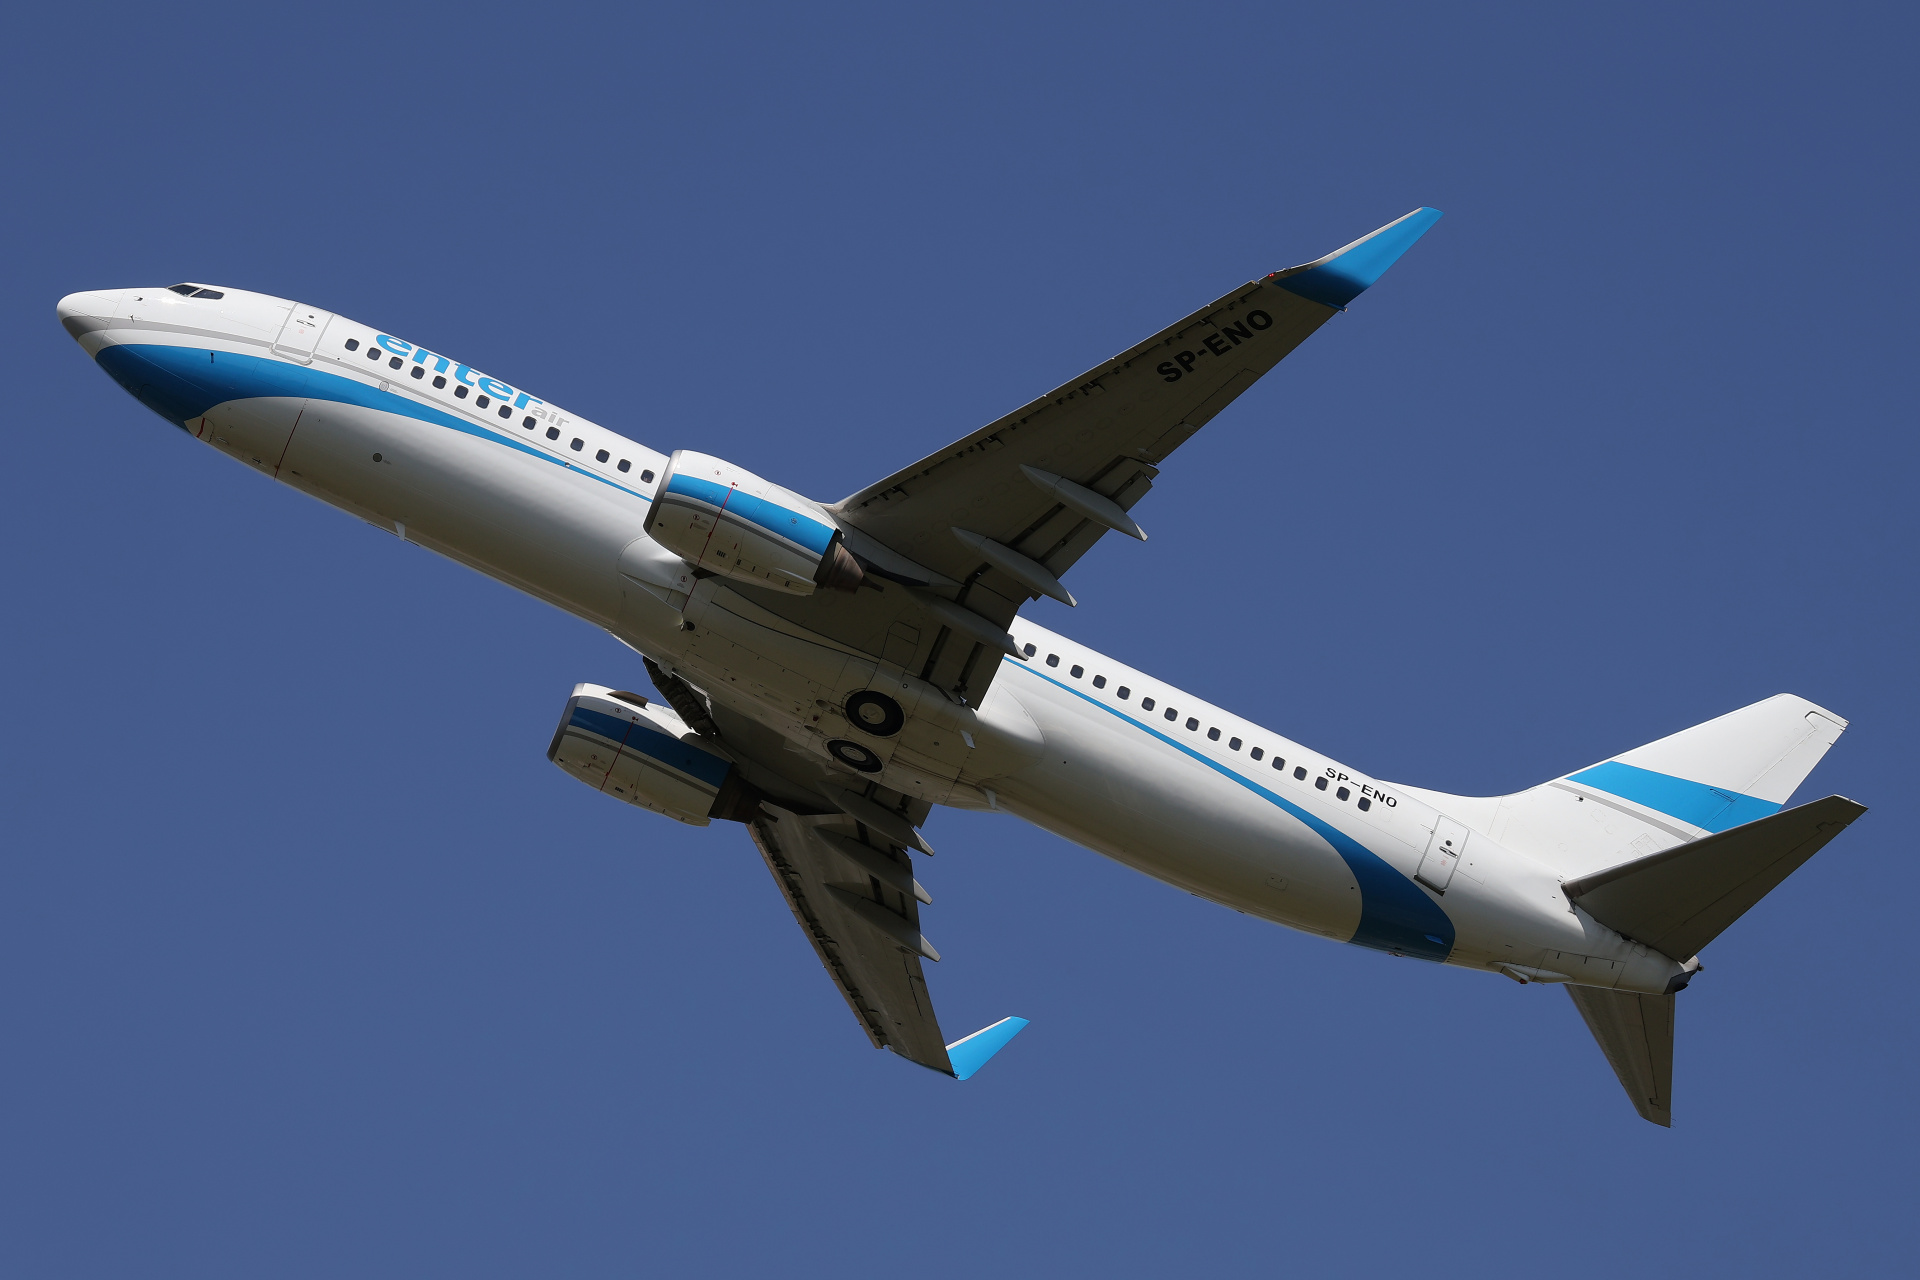 SP-ENO (Aircraft » EPWA Spotting » Boeing 737-800 » Enter Air)